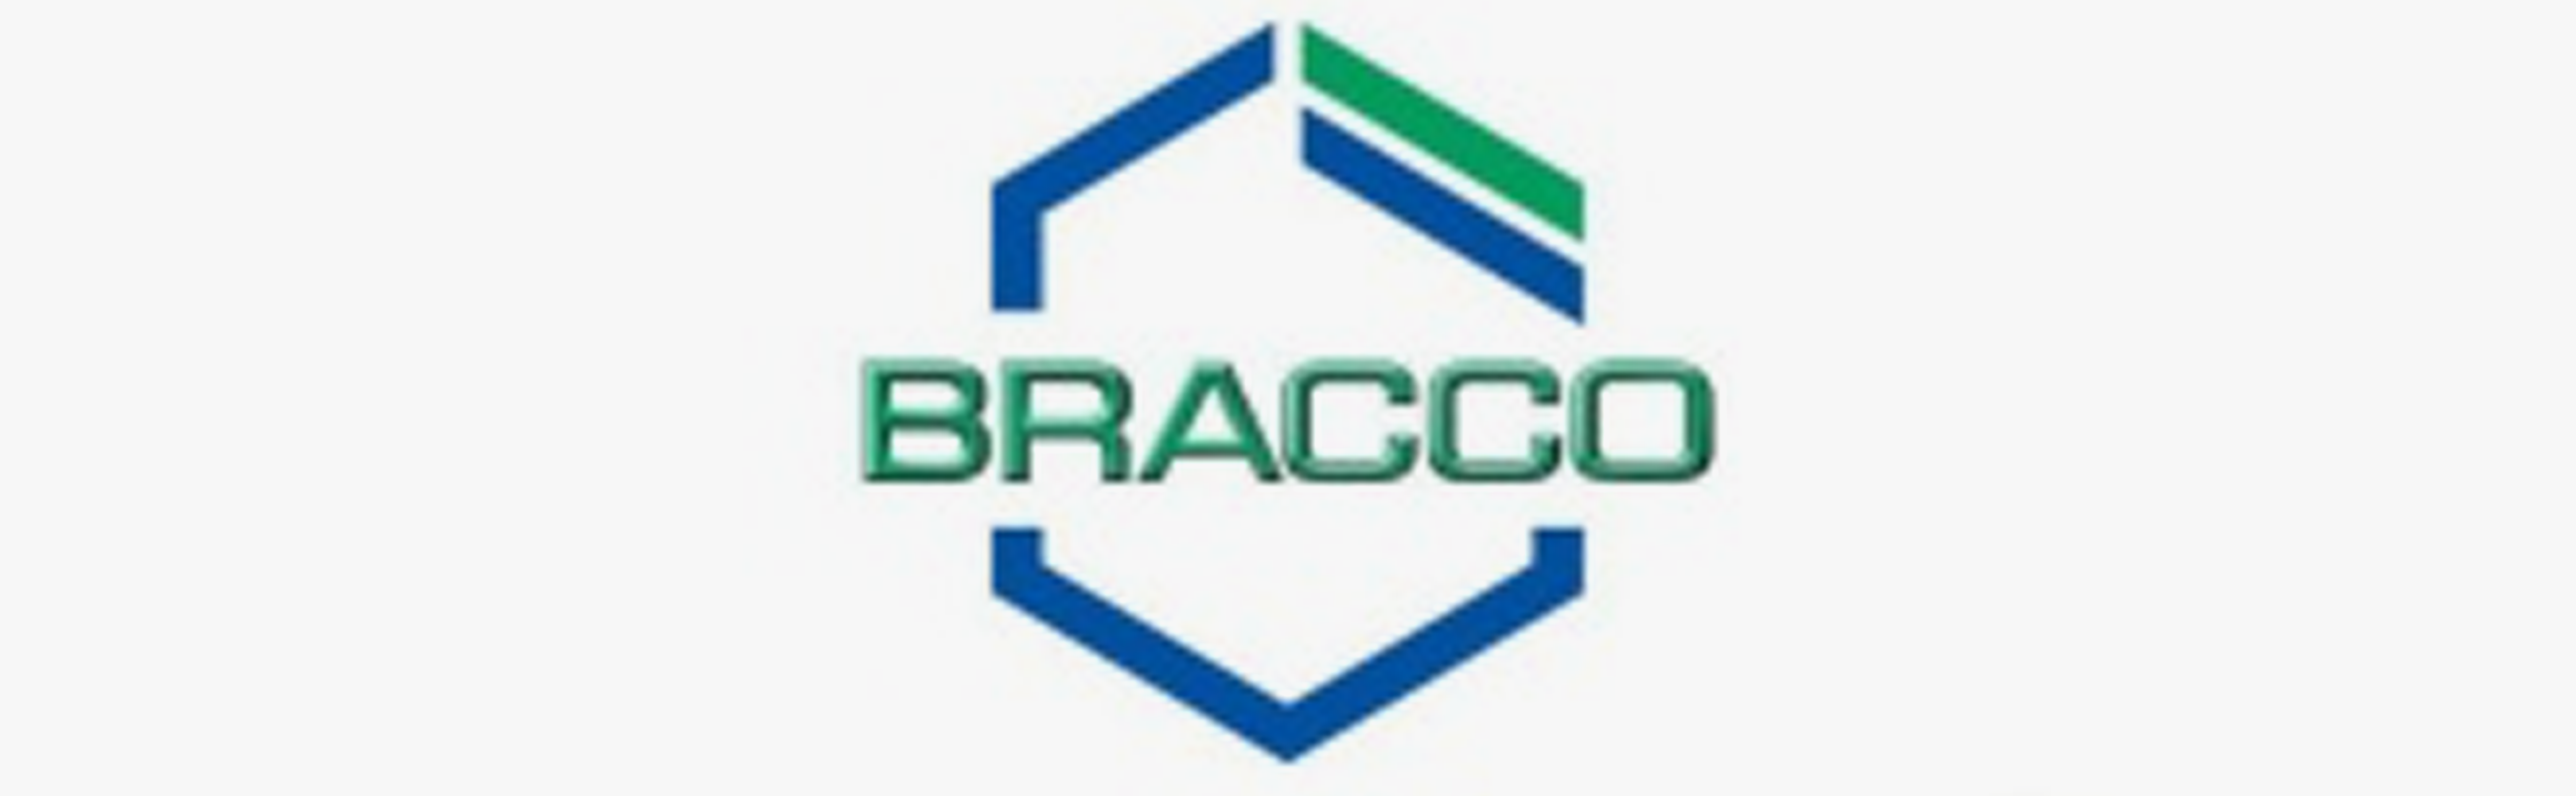 Bracco Diagnostics 